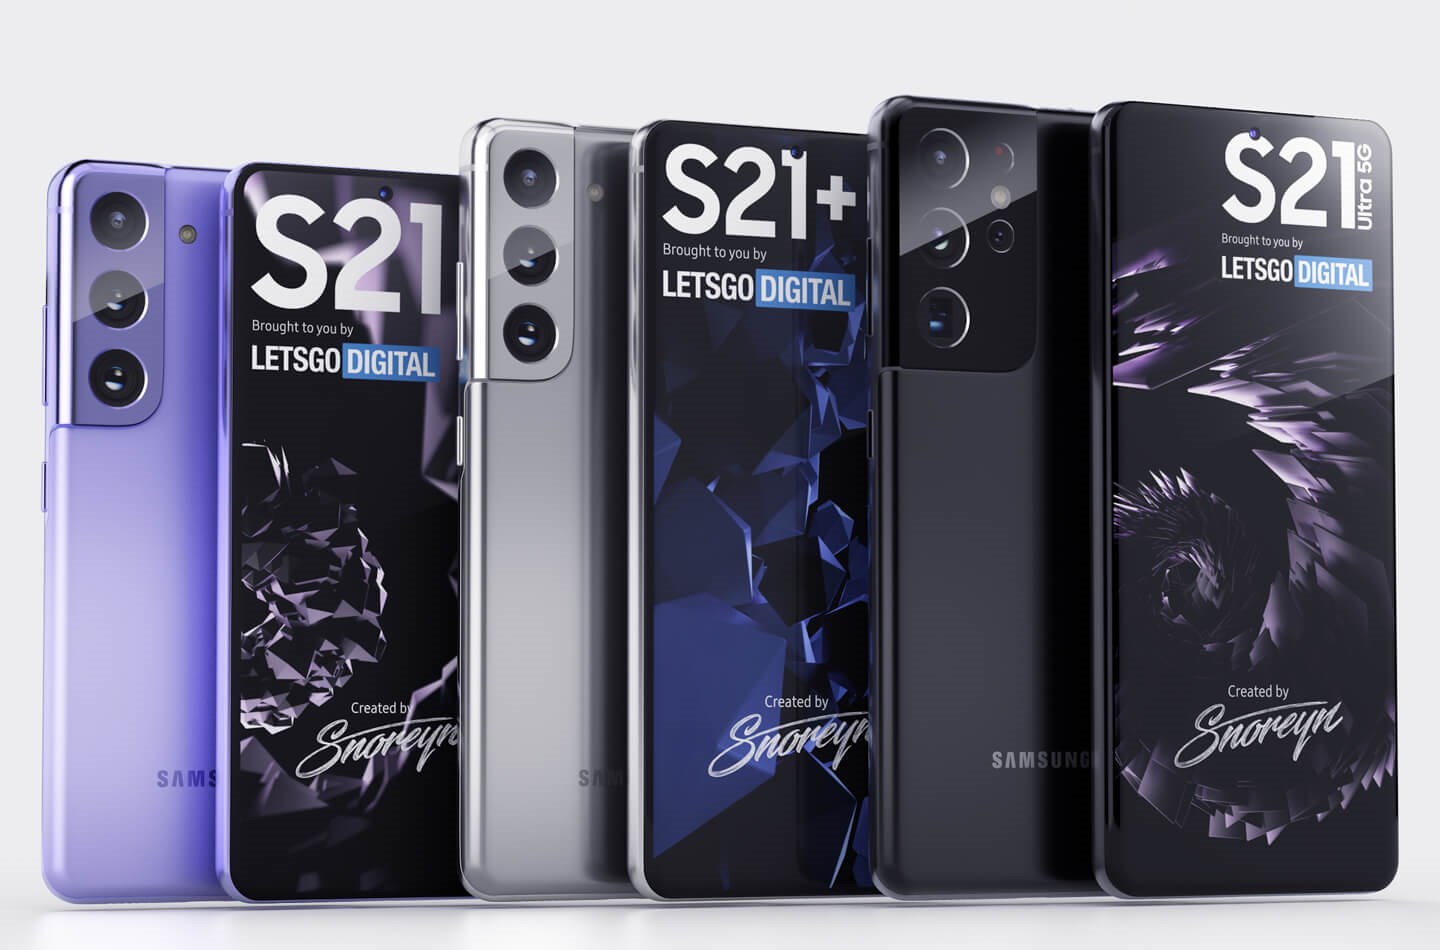 Samsung Galaxy S21 serisinin resmi tanıtım videoları ortaya çıktı